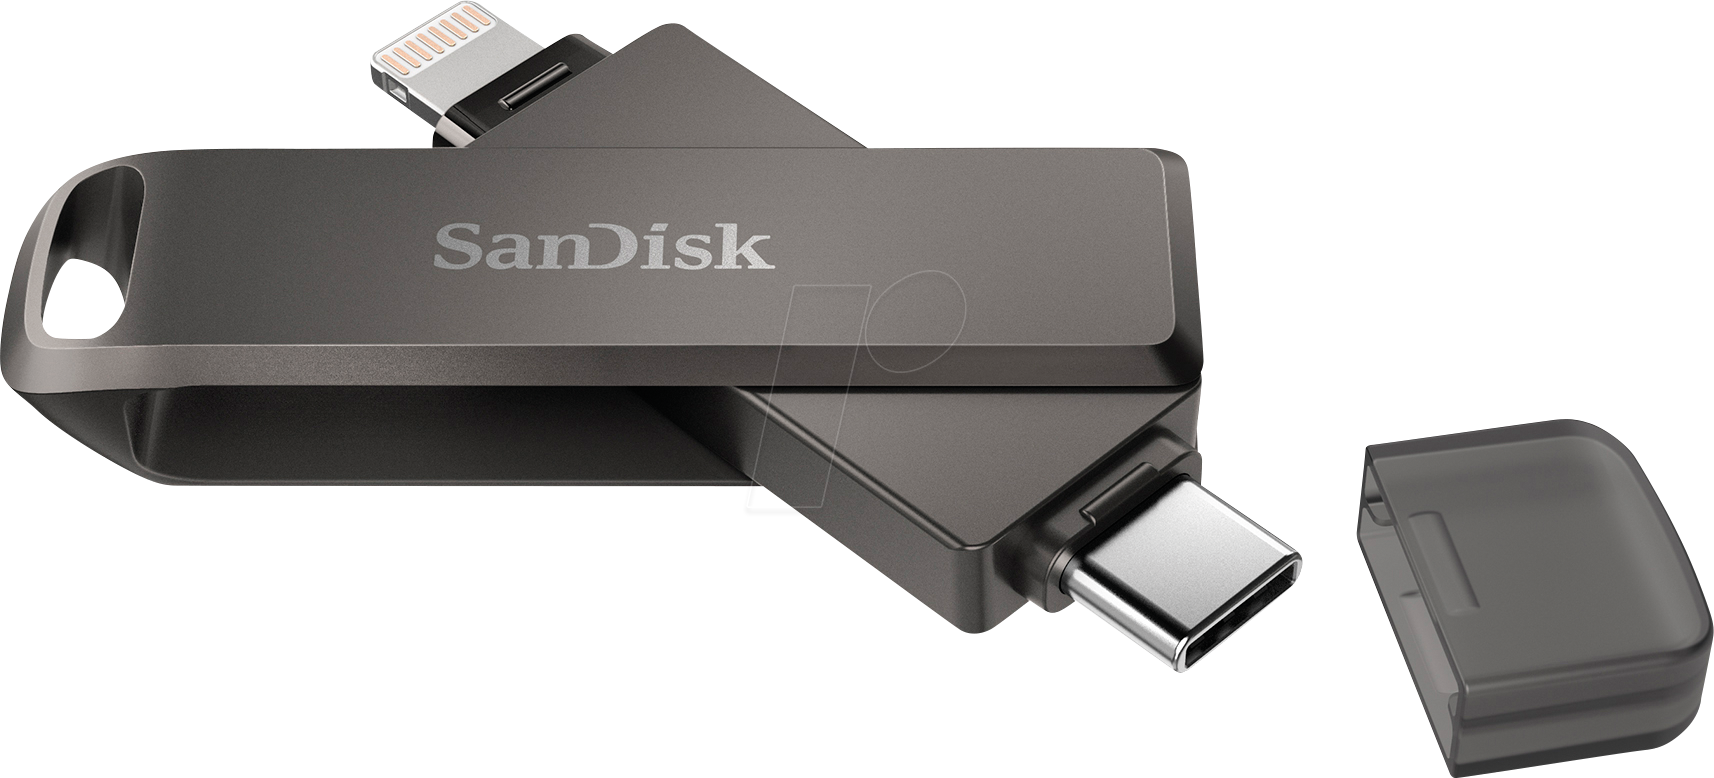 SDIX70N128GGN6NE: Clé USB, USB 3.0, 128 Go, iXpand luxe, Lightning, USB-C.  chez reichelt elektronik